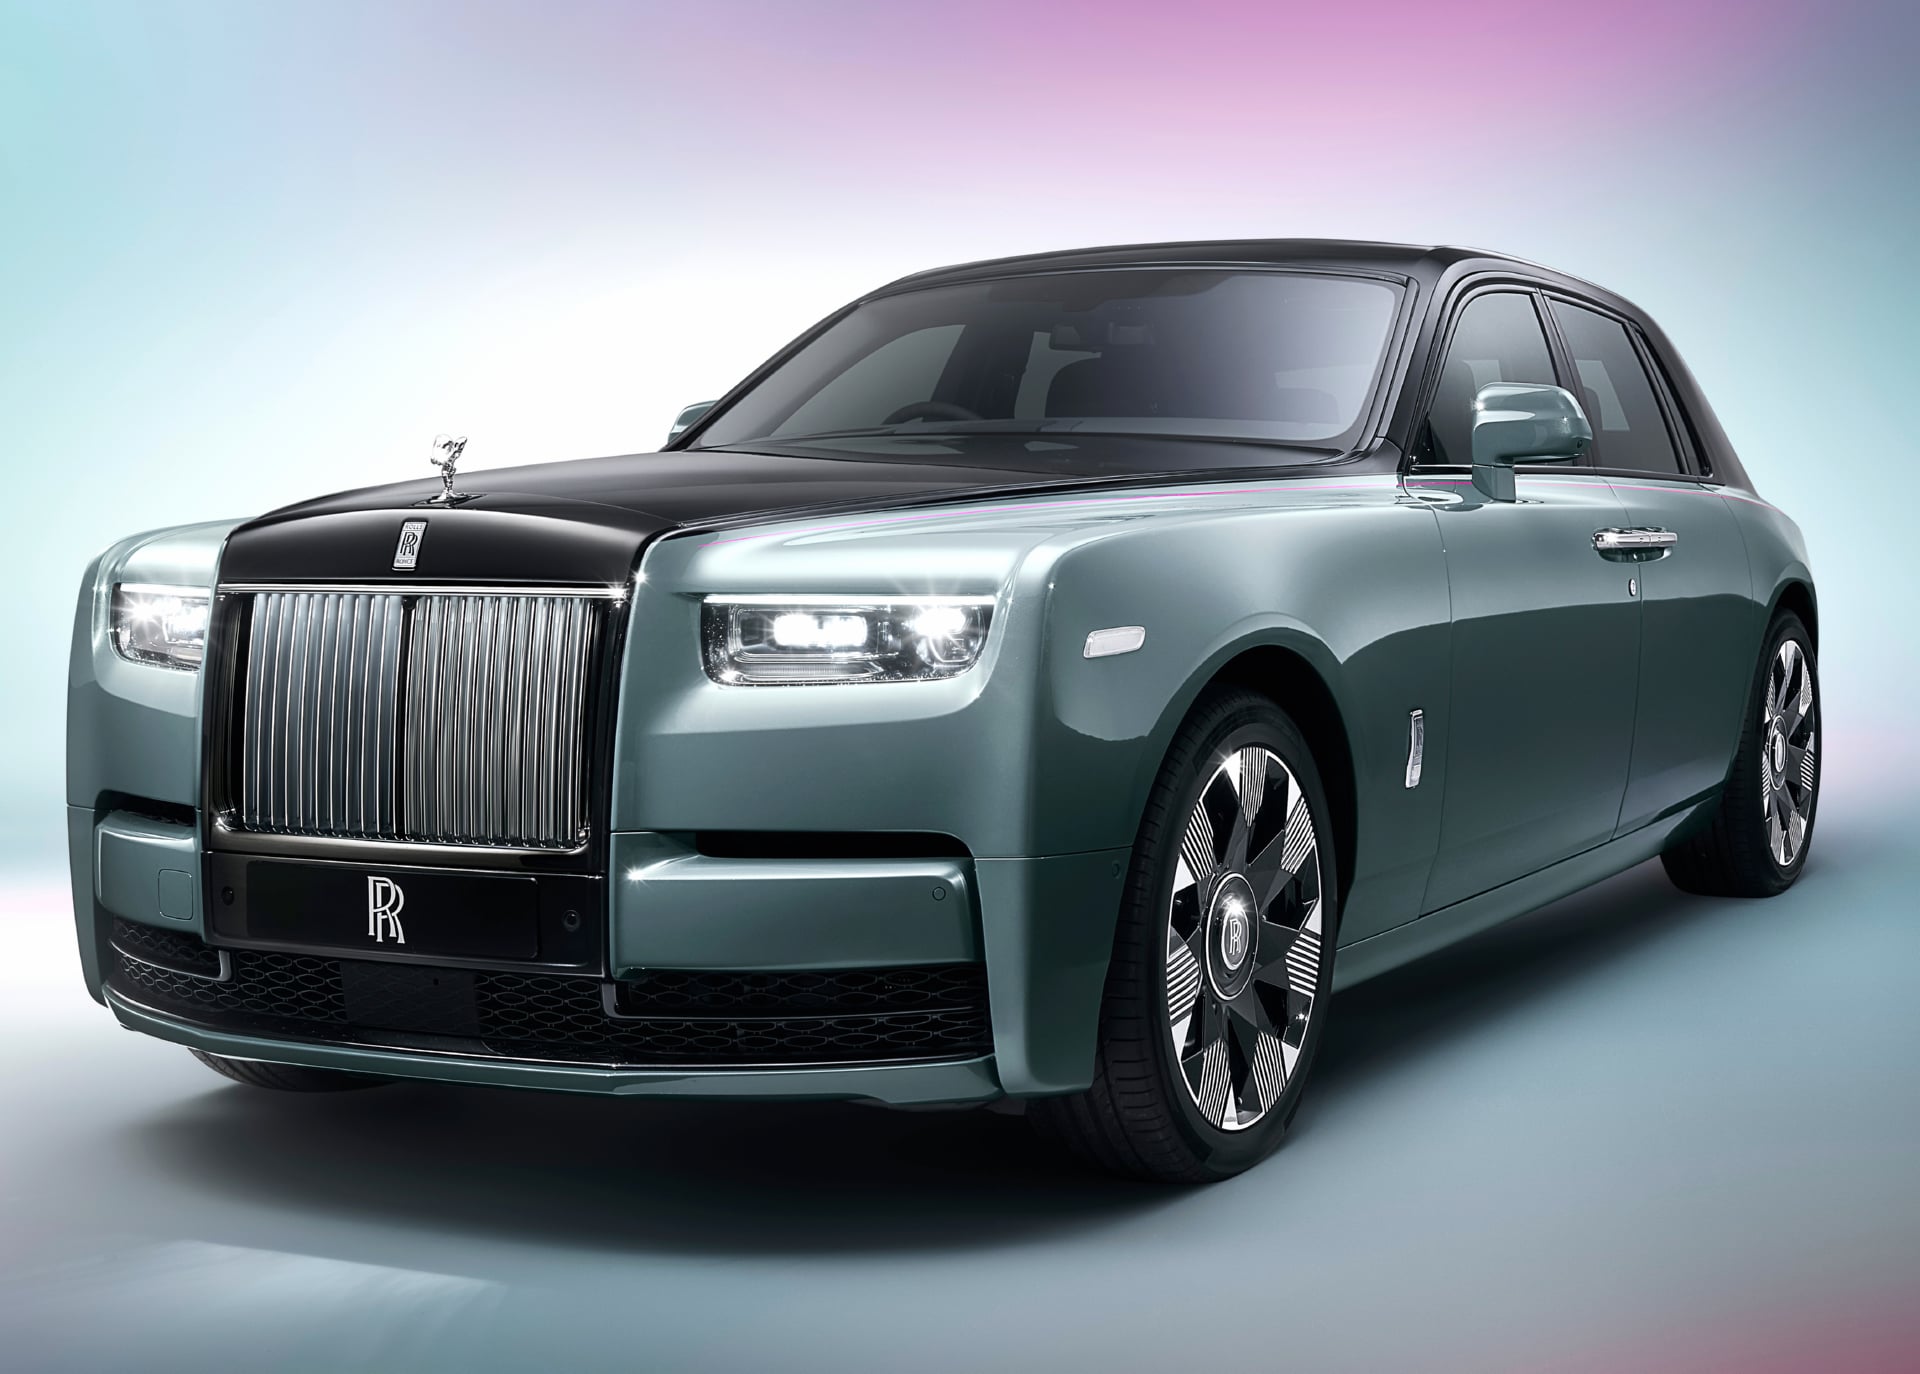 Rolls-Royce Phantom Series II at 1024 x 1024 iPad size wallpapers HD quality